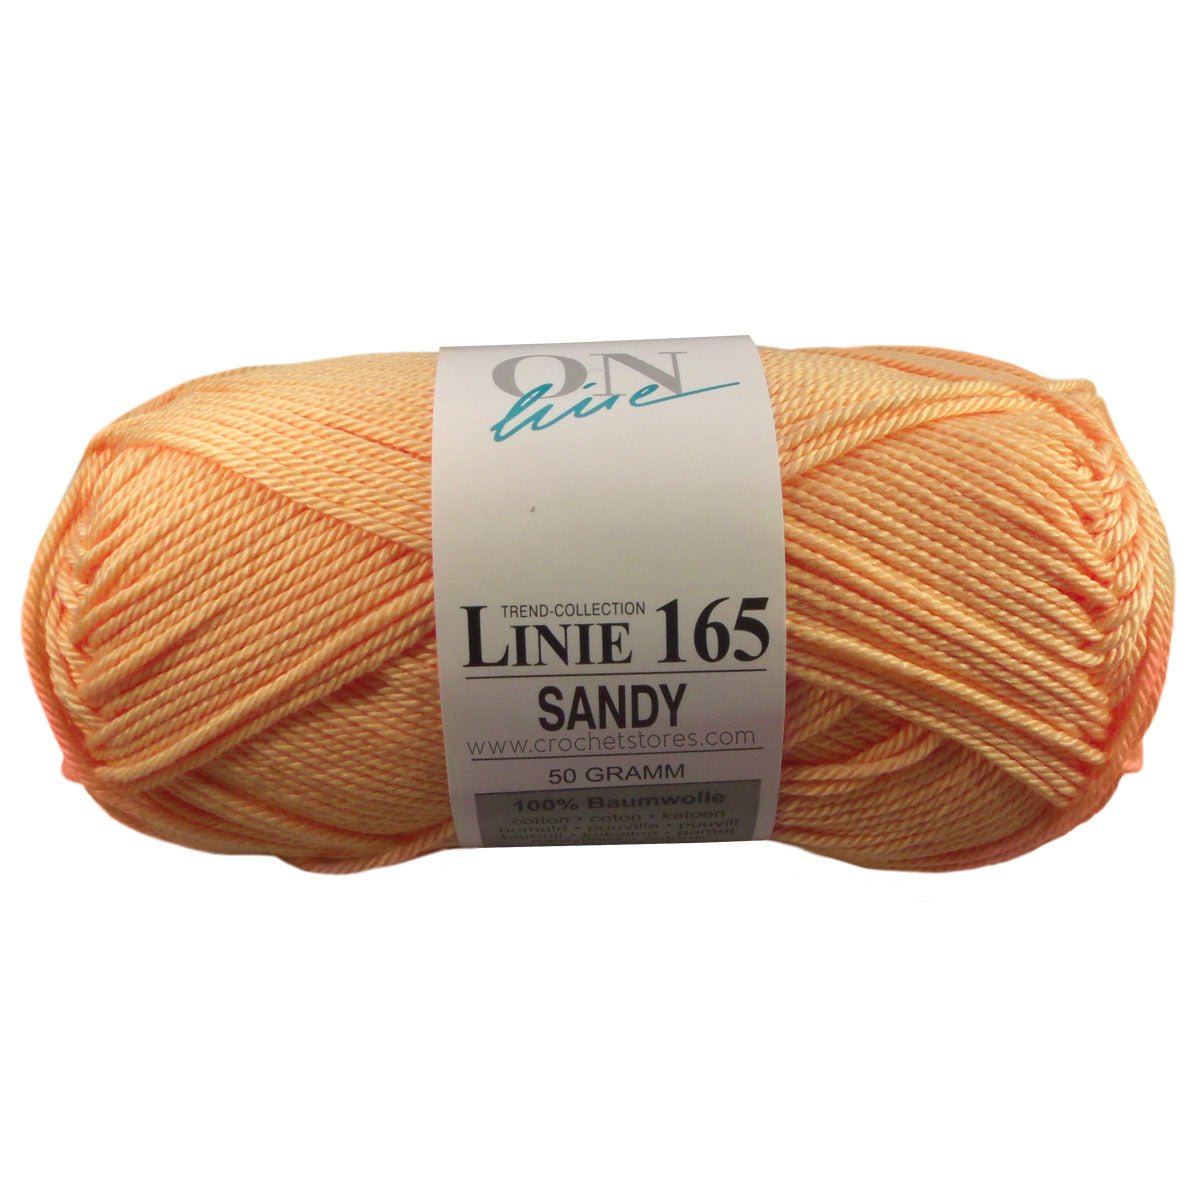 SANDY - Crochetstores110165-00234014366033639